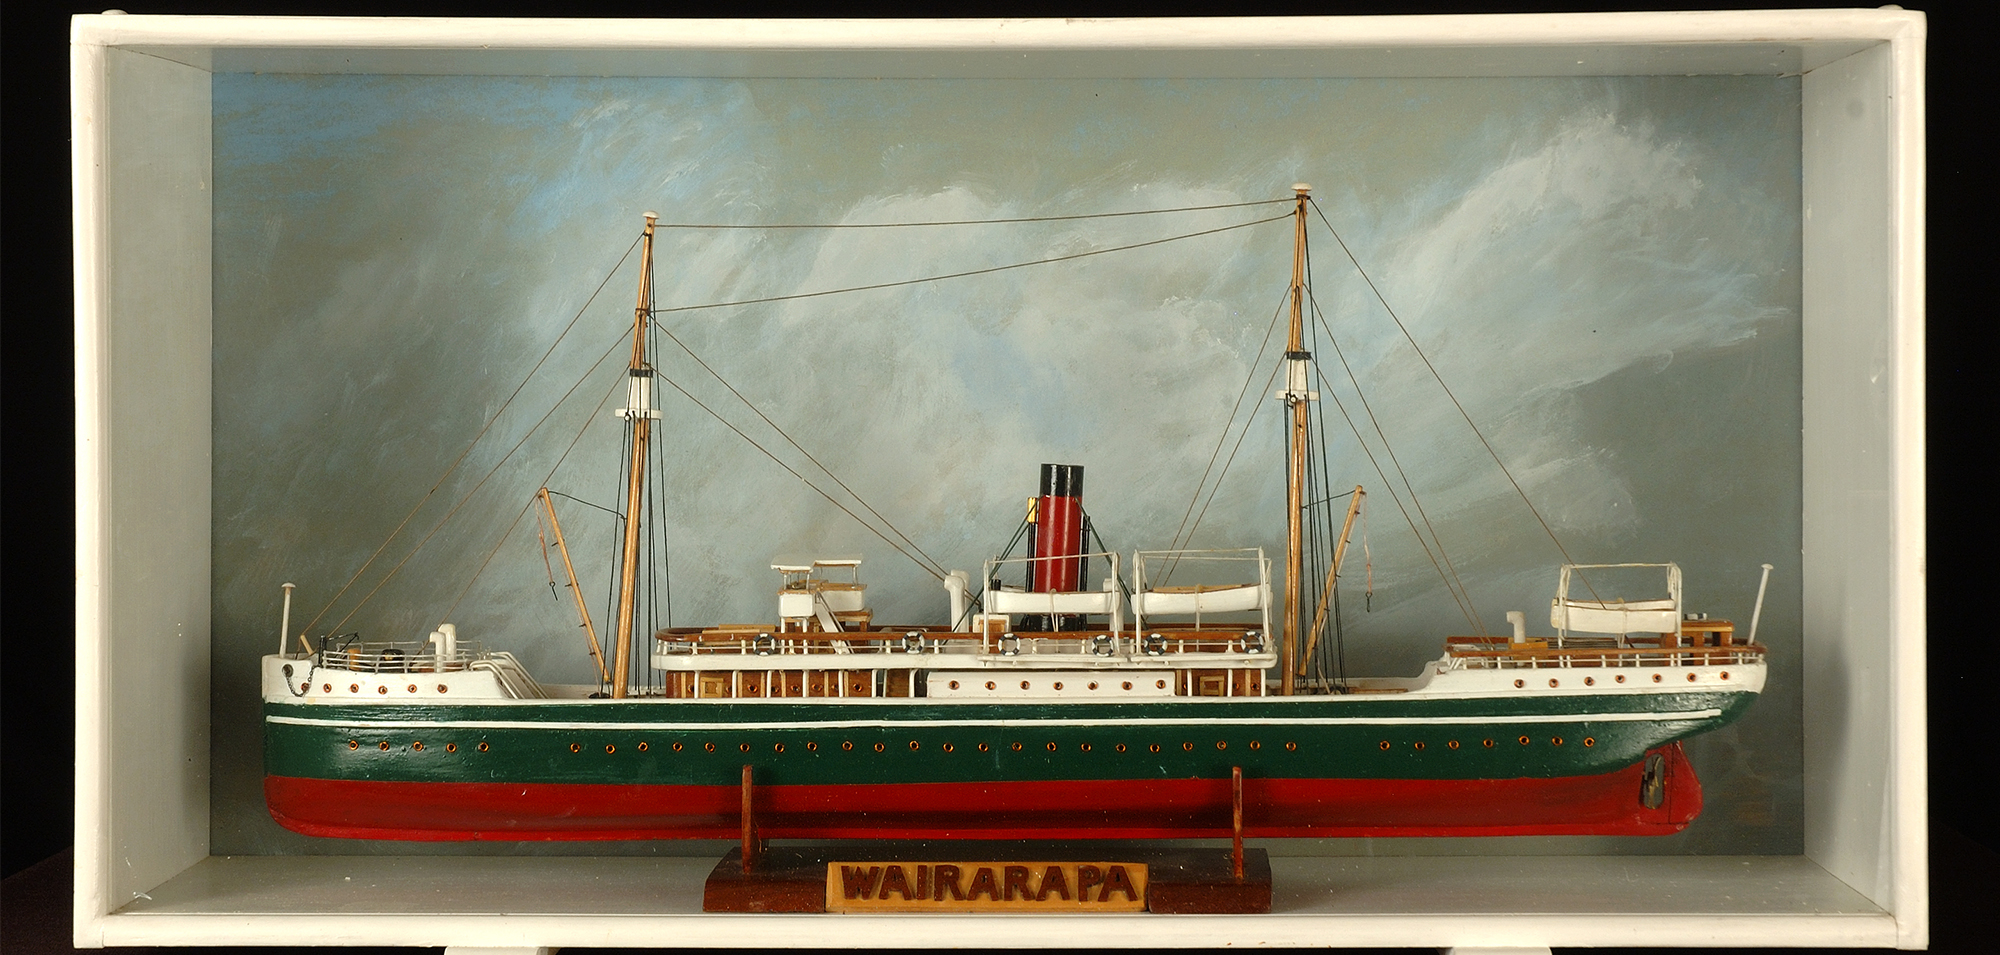 Wairarapa ship